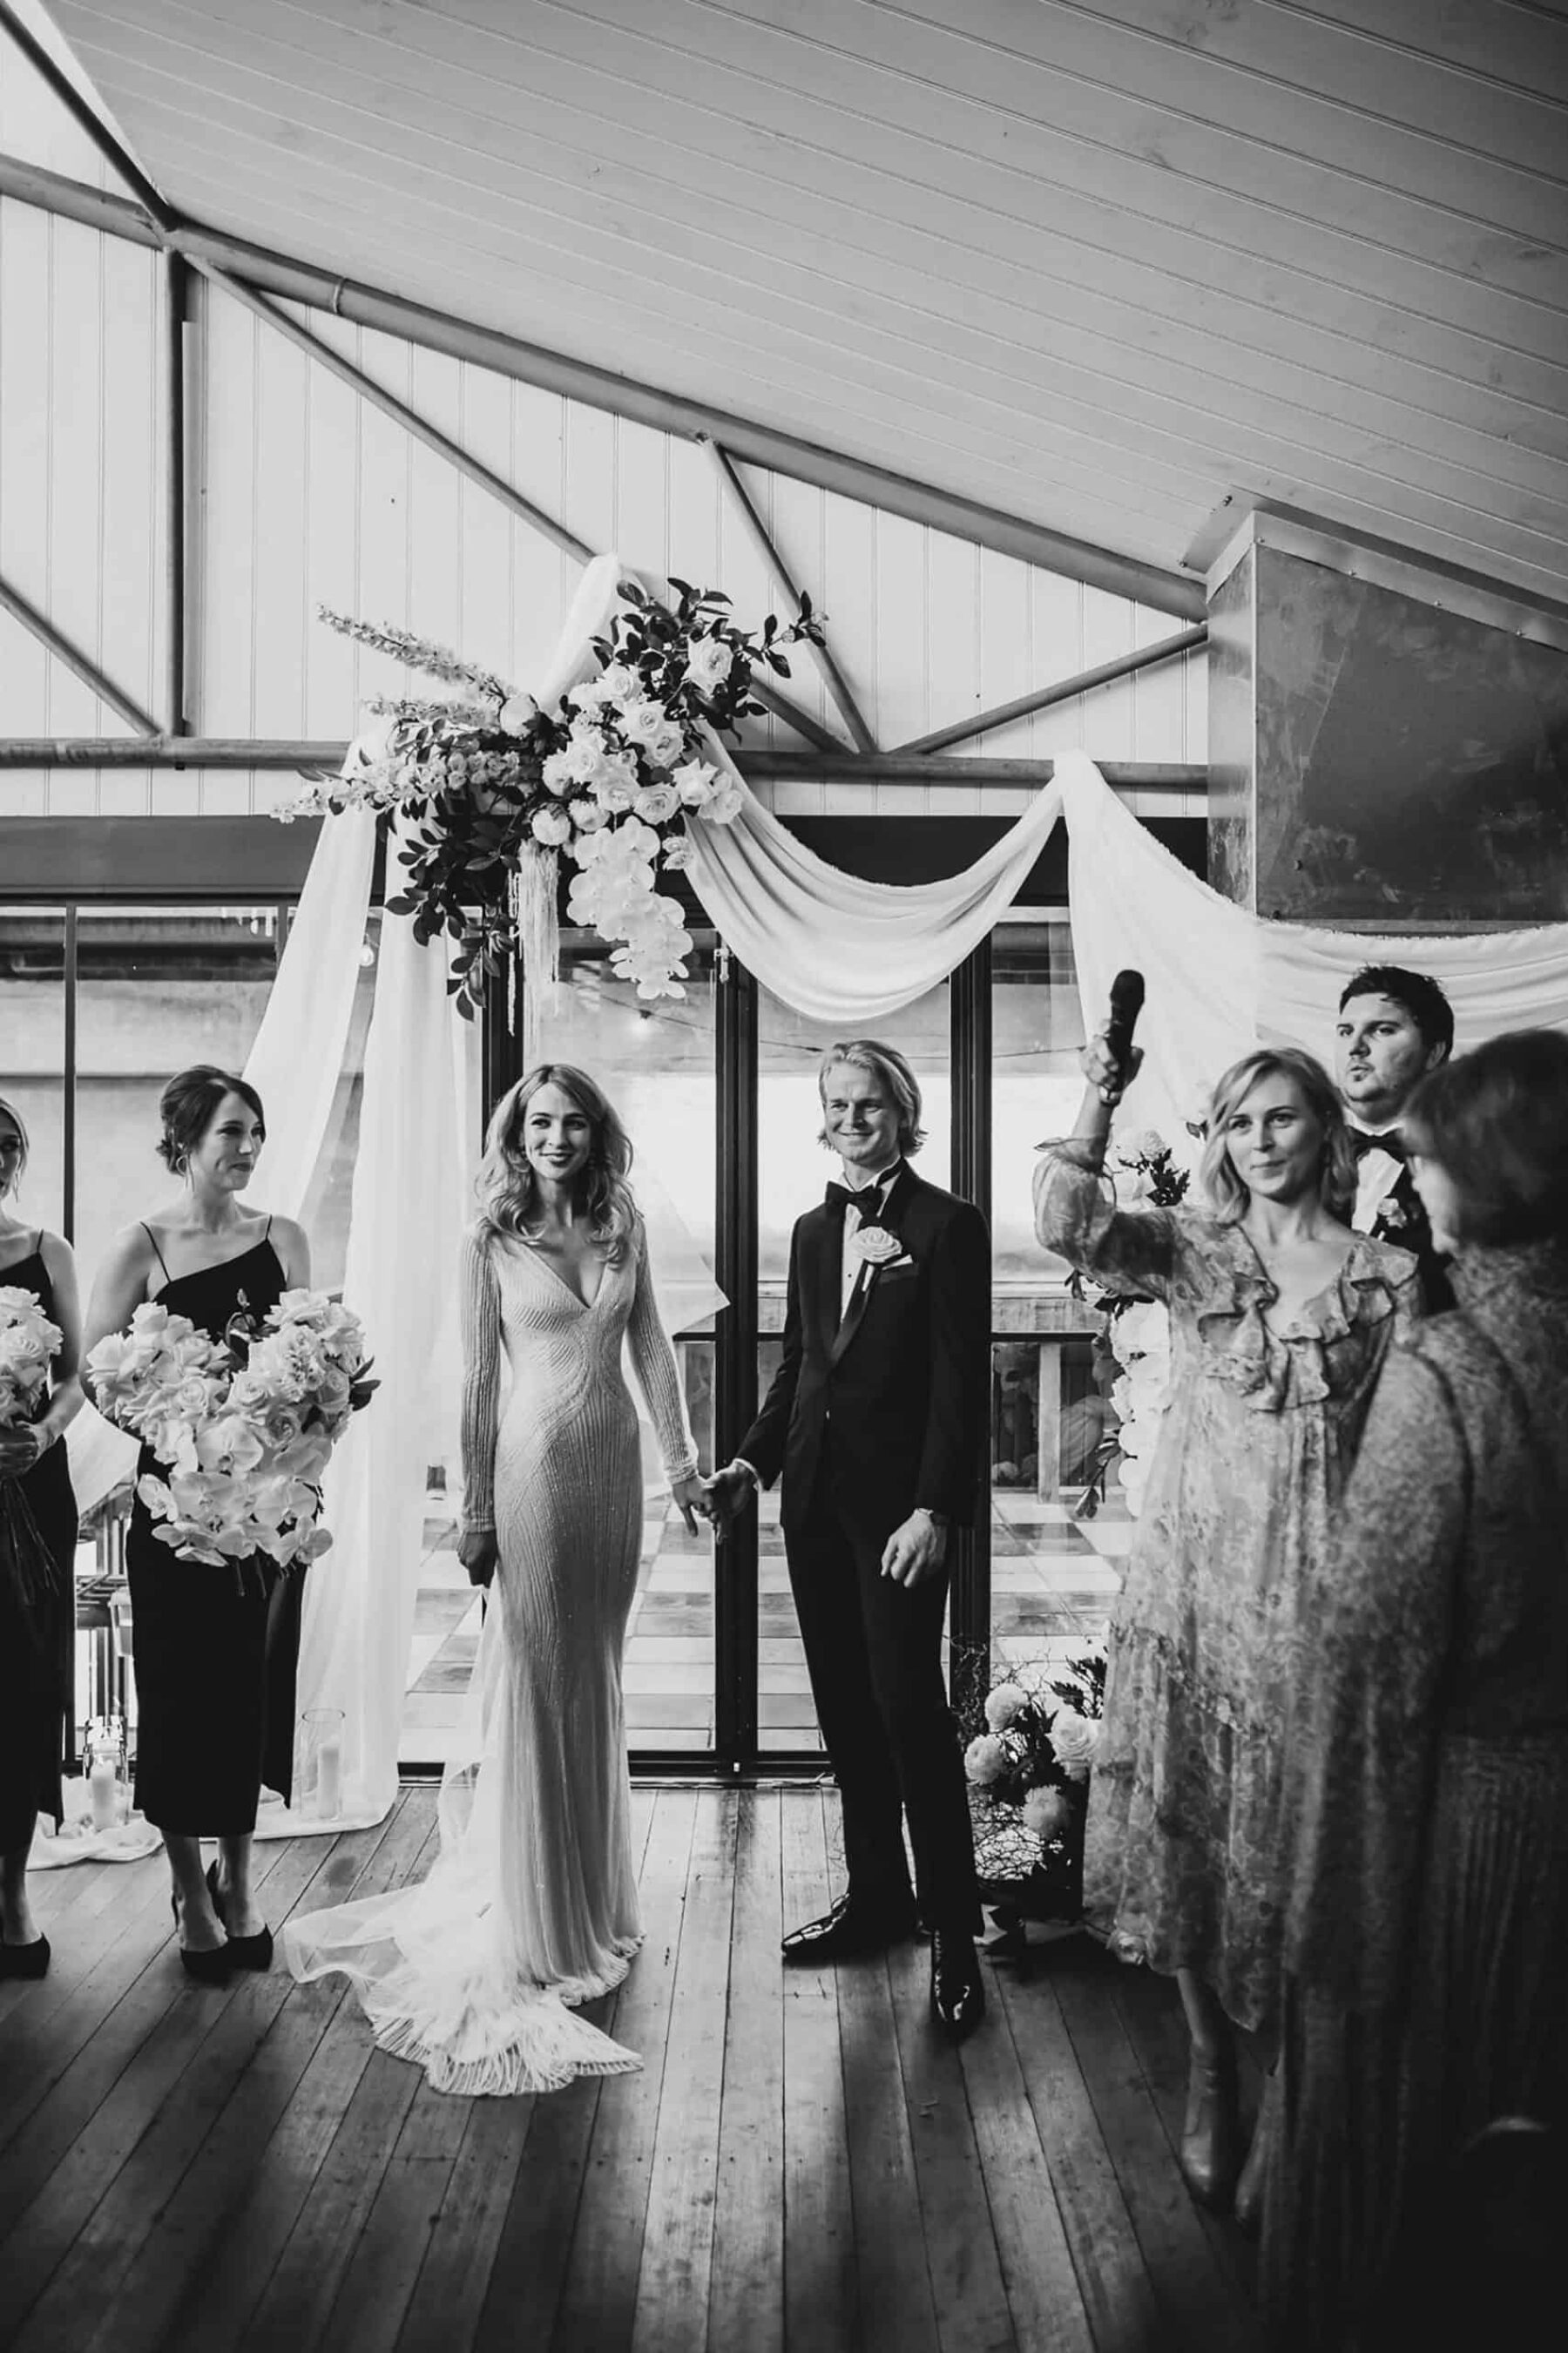 maodern and elegant warehouse wedding at Gordon St Garage, Perth. Photography by Adam Levi Browne